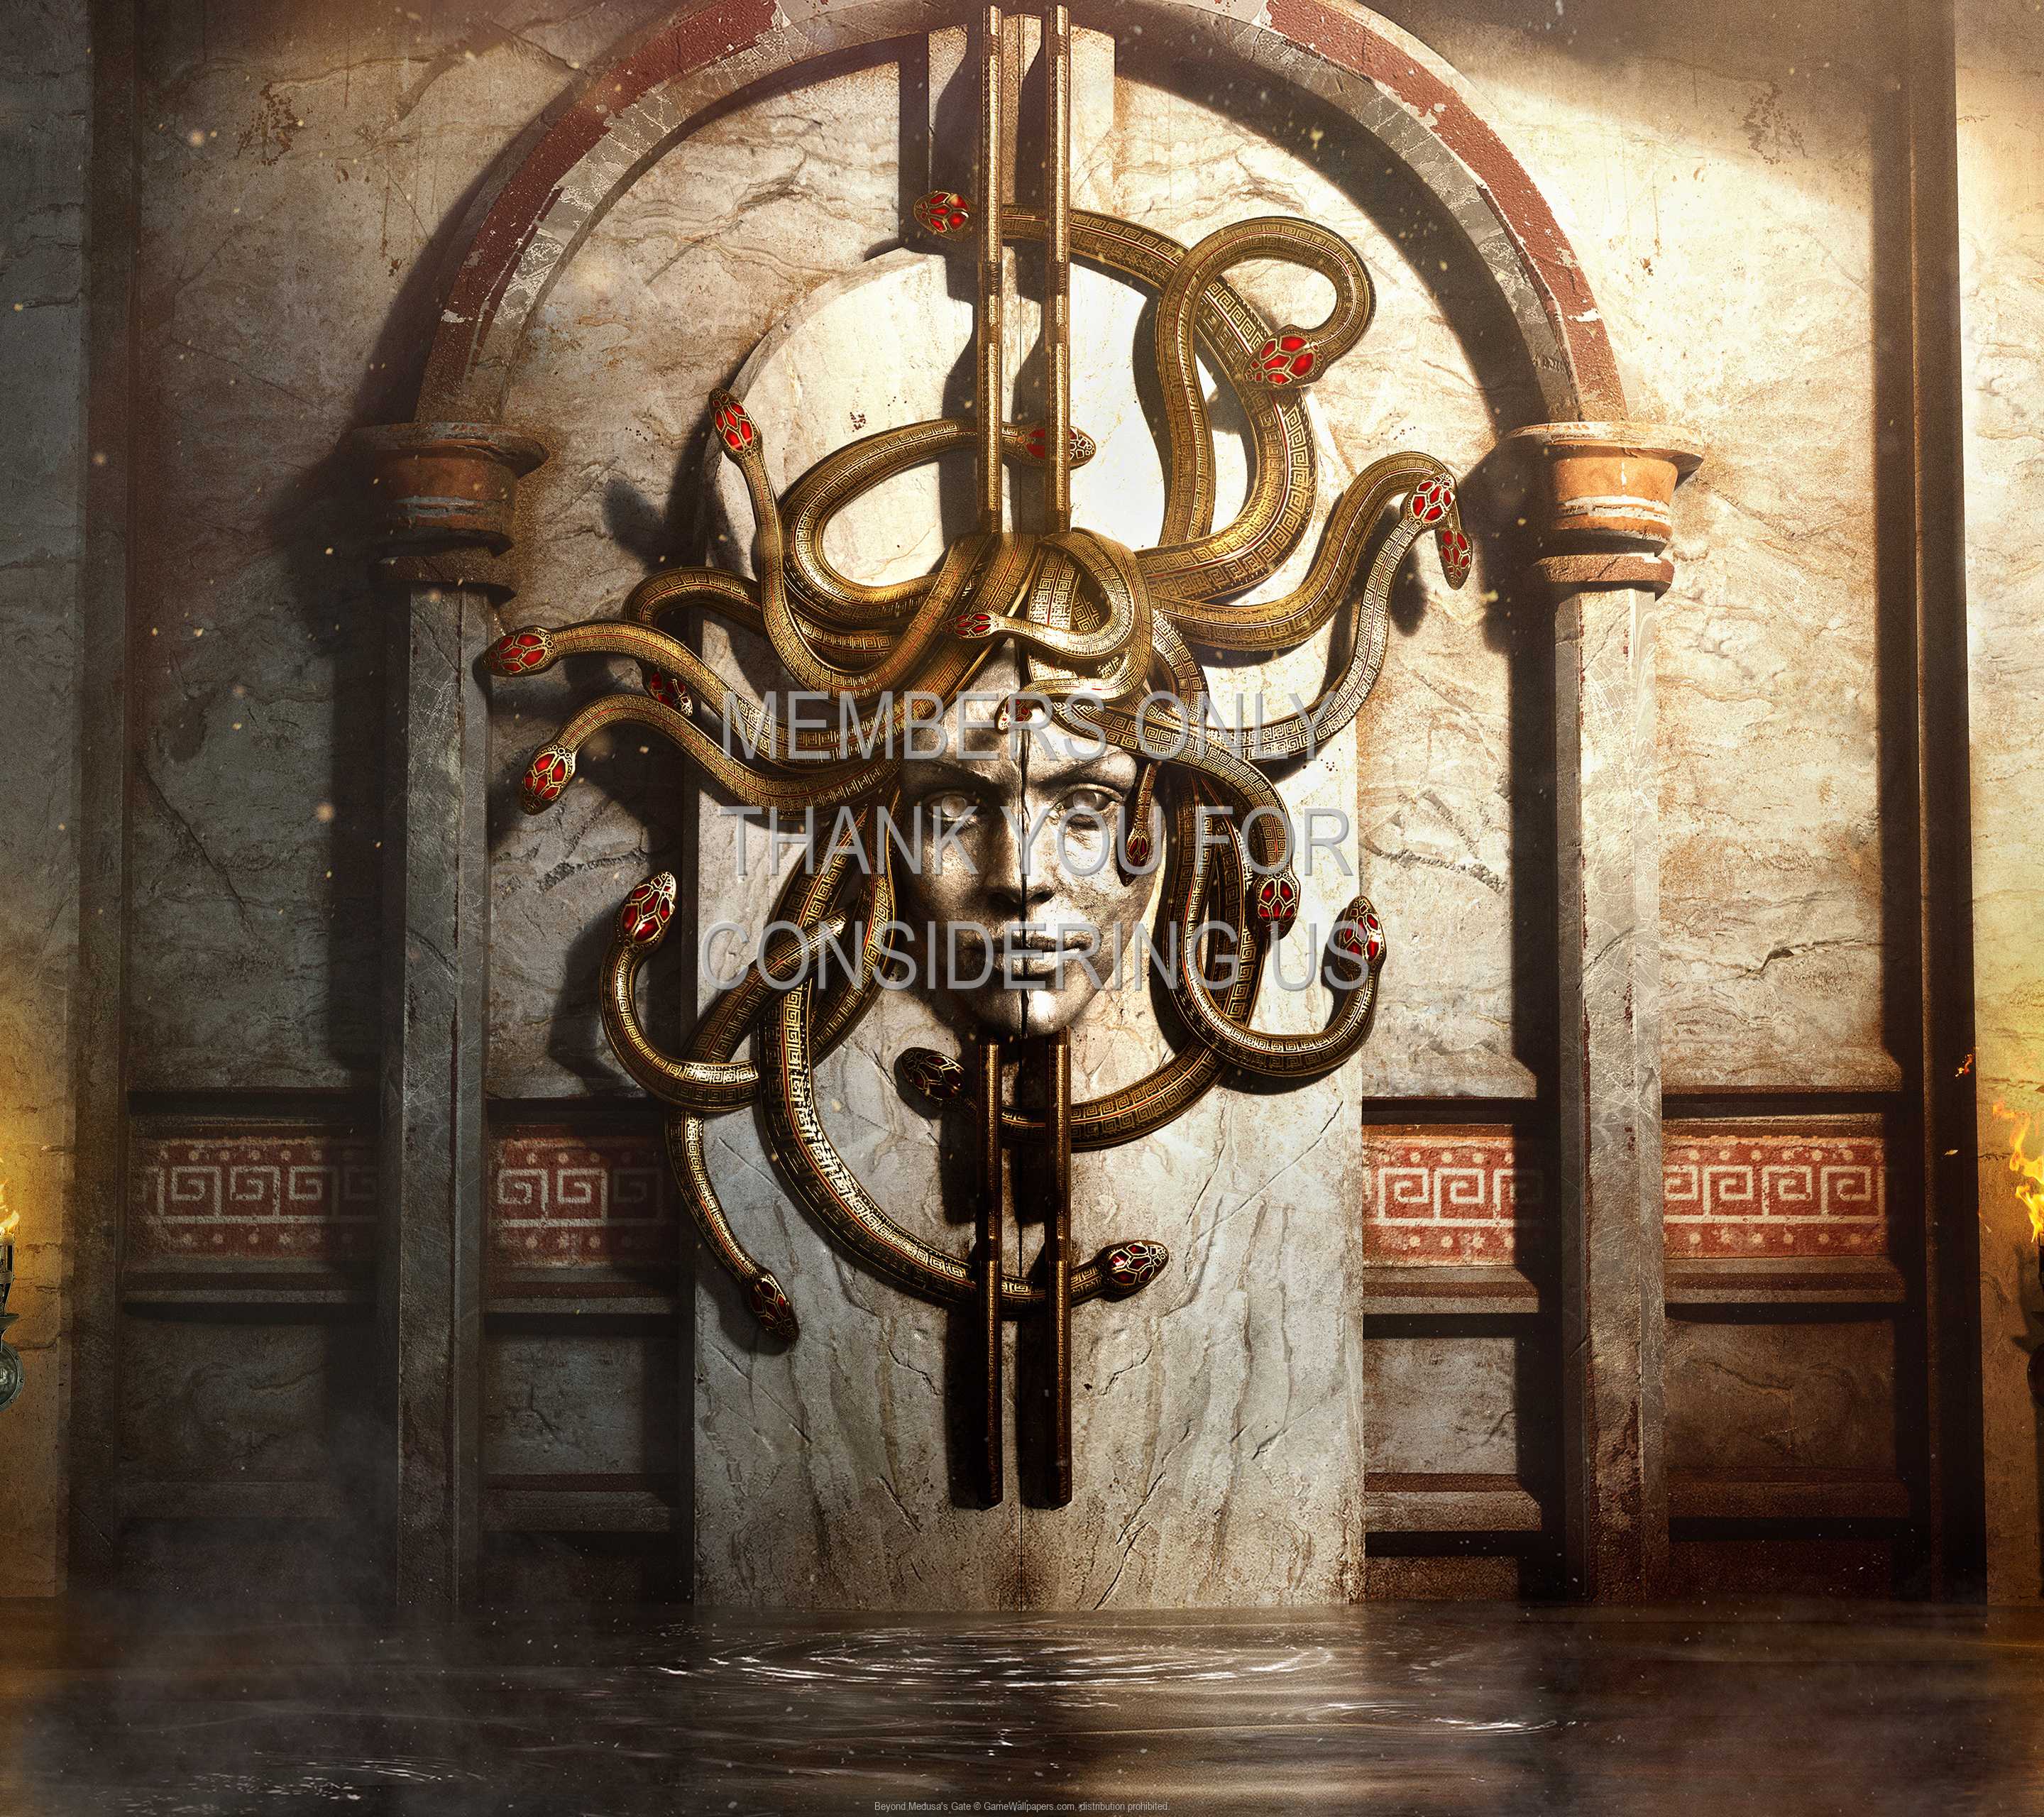 Beyond Medusa's Gate 1440p Horizontal Mobile wallpaper or background 01